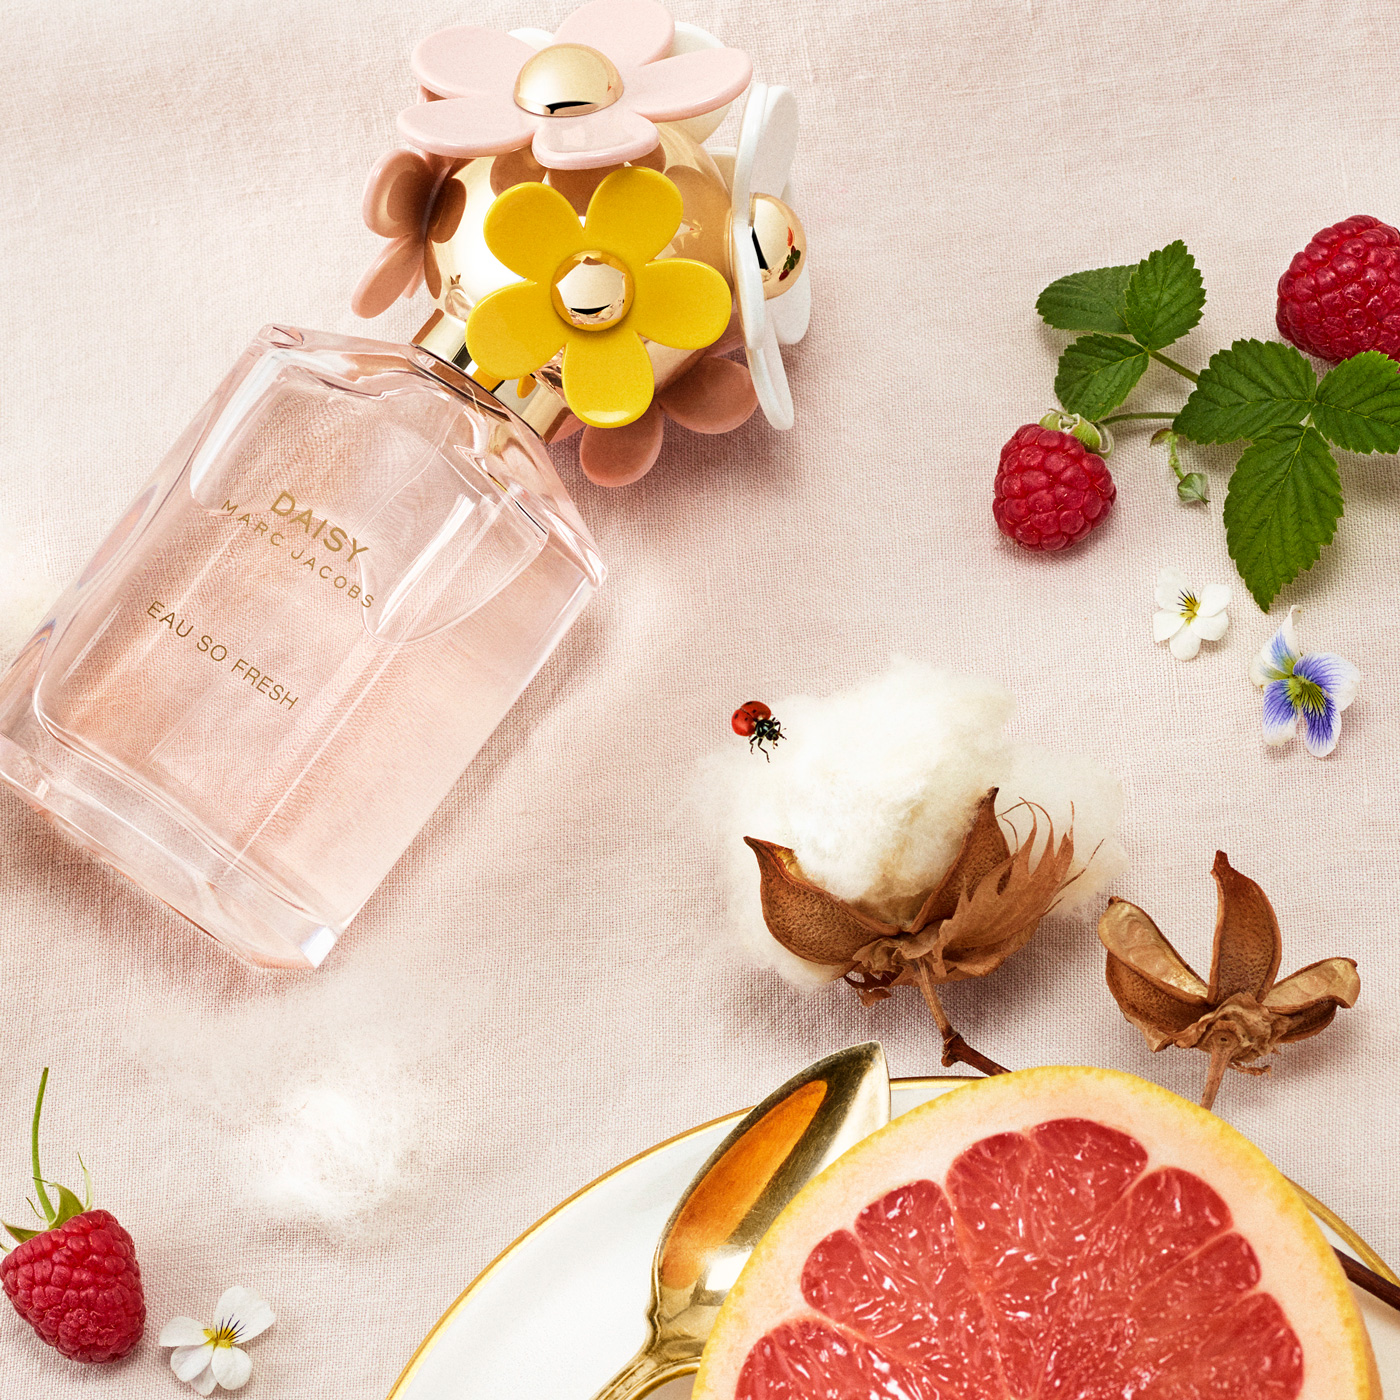 Daisy Eau so Fresh: Fragrance Notes Image